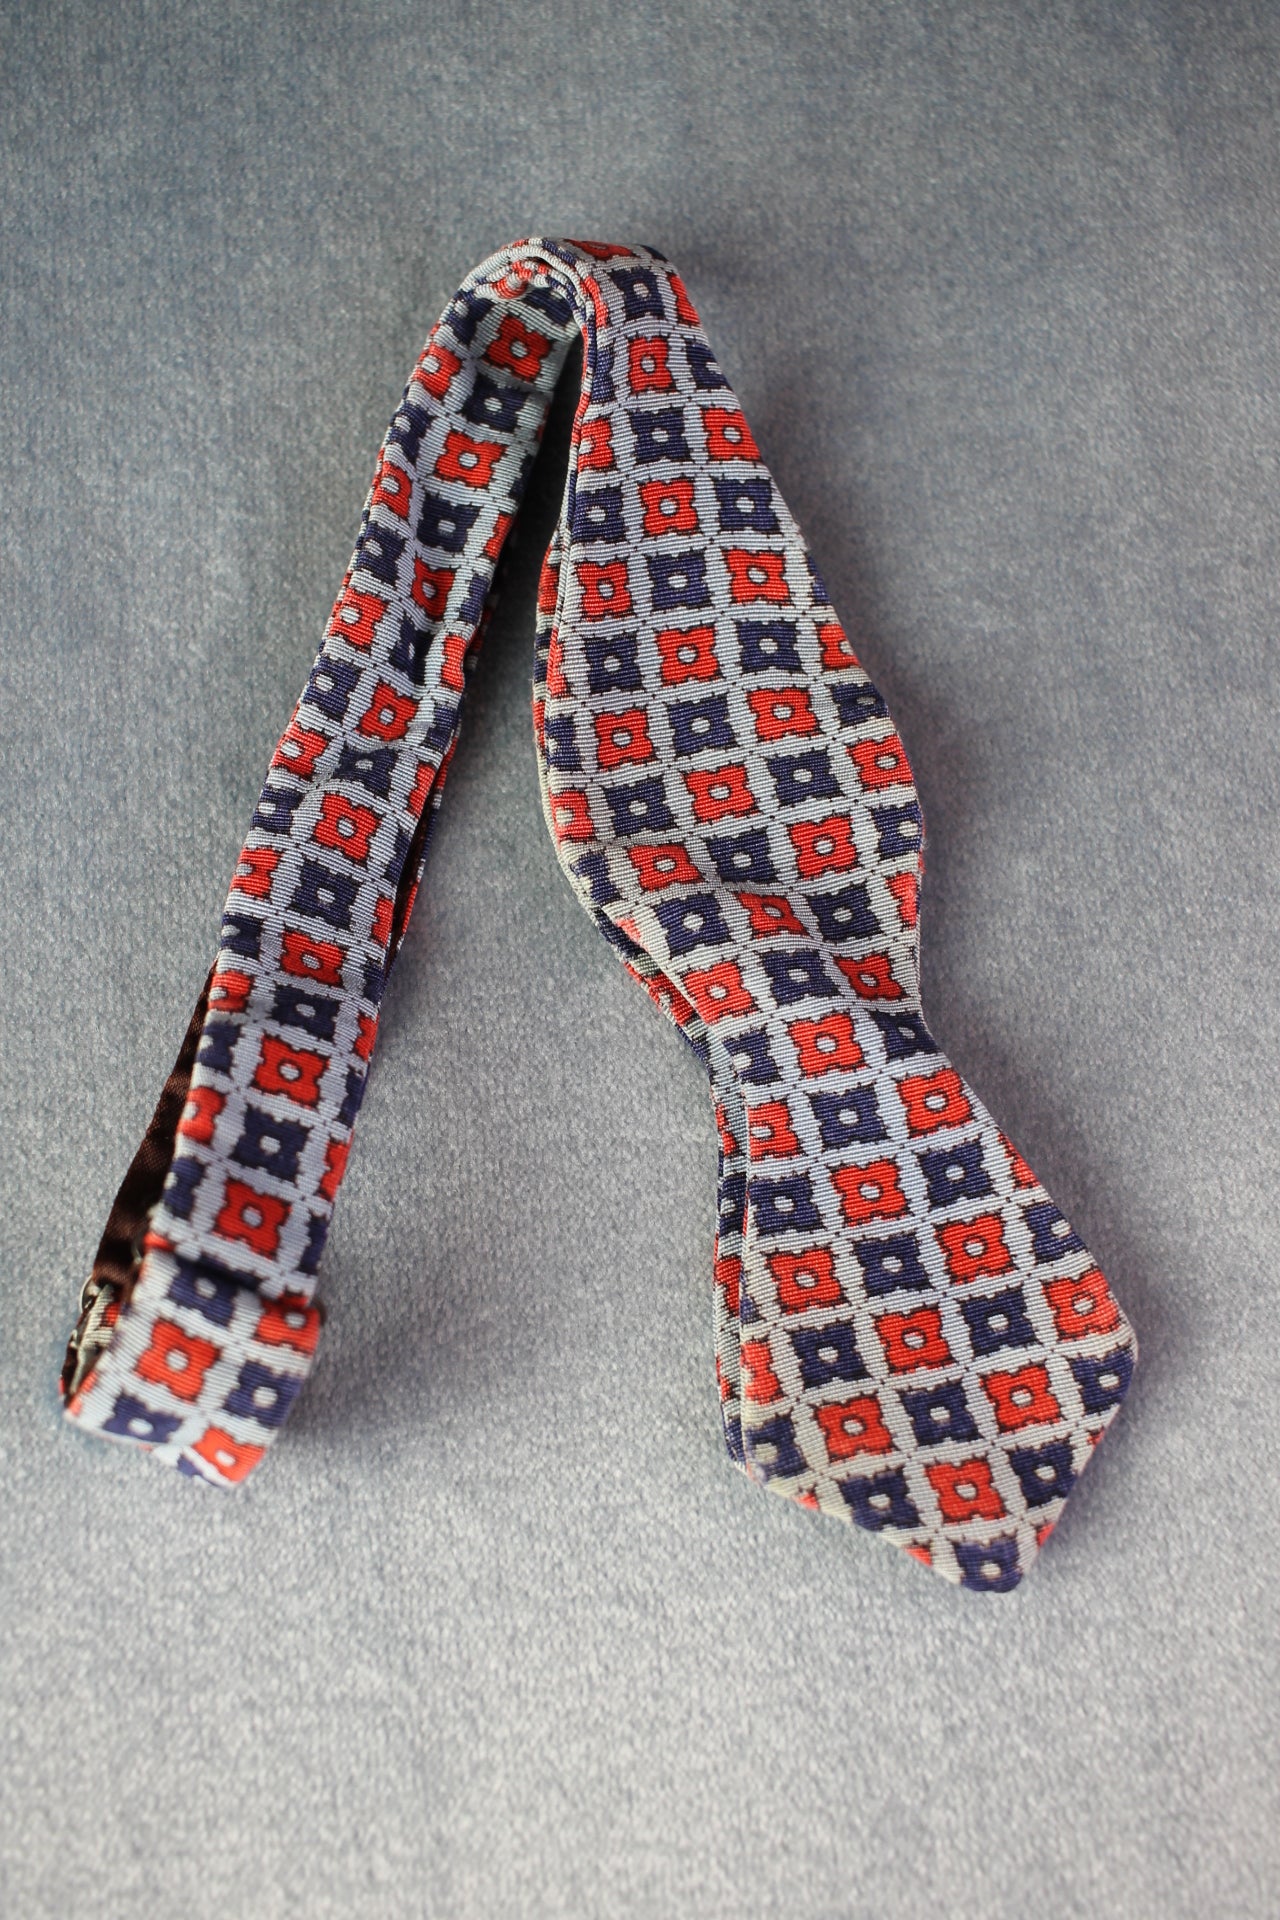 Vintage Arrow self tie arrow end blue red square pattern bow tie adjustable